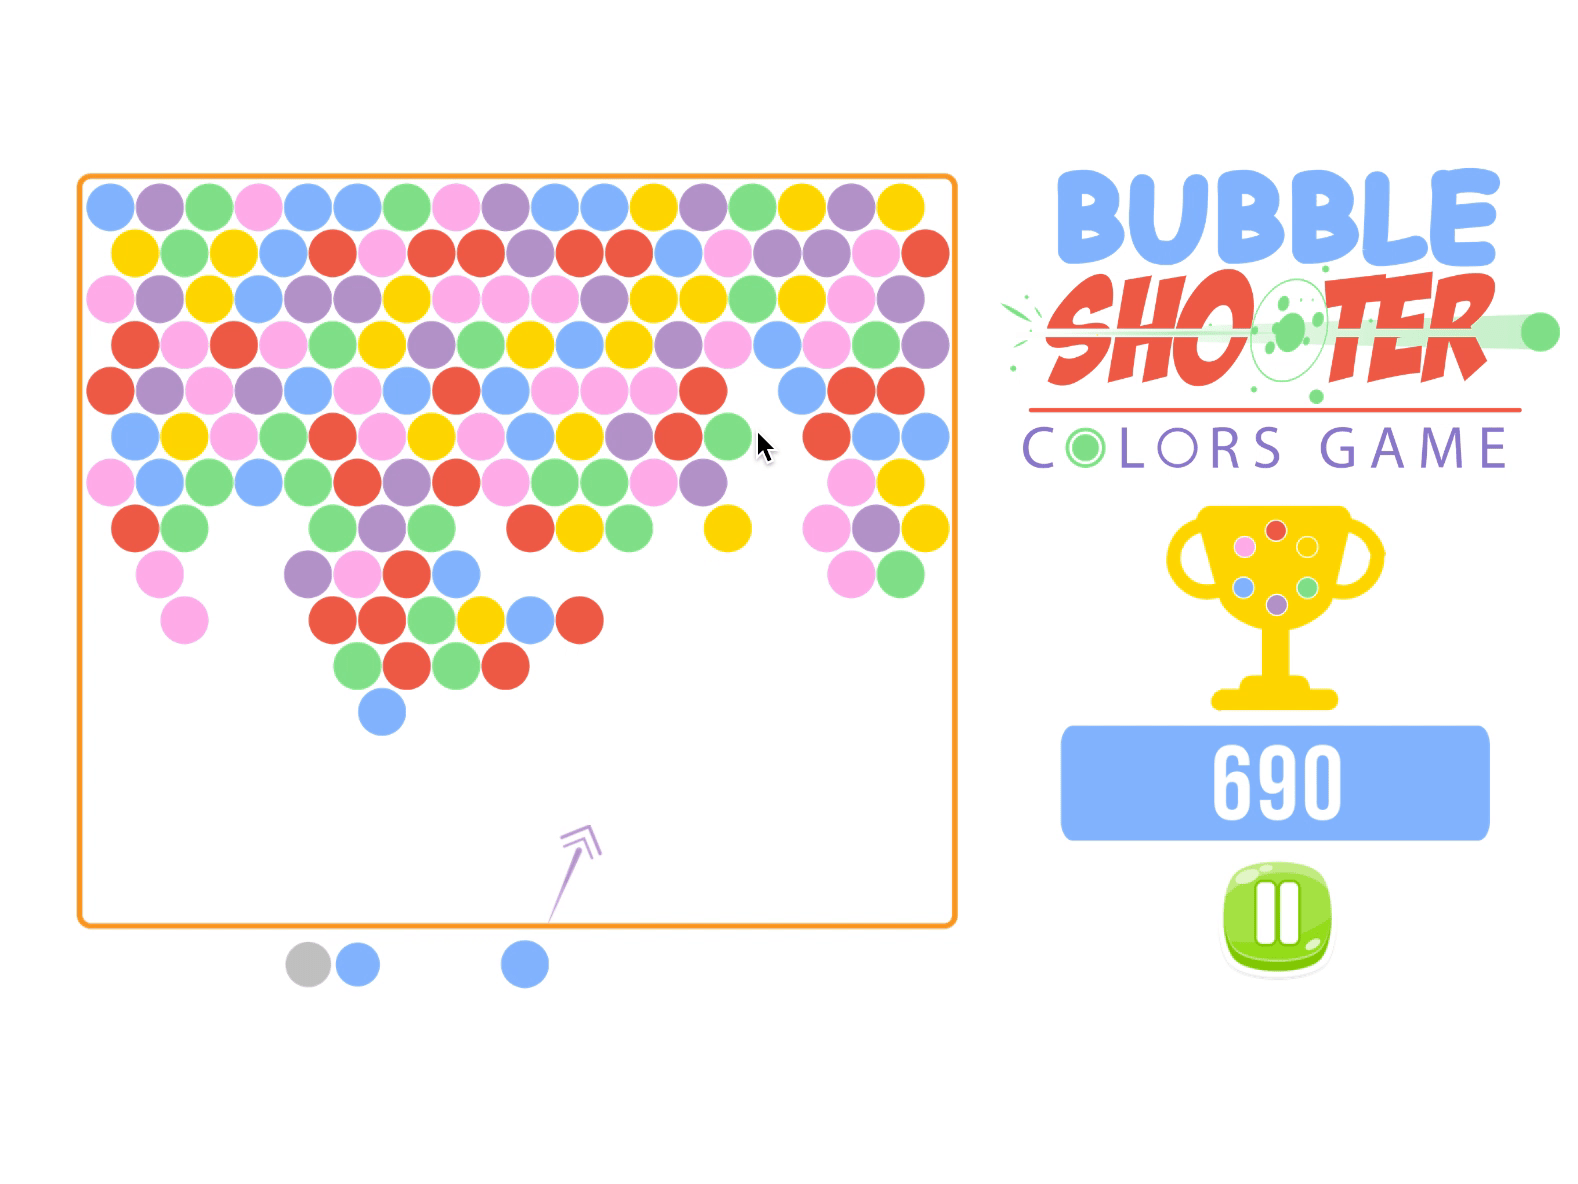 Bubble Shooter Colors Game Screenshot 8